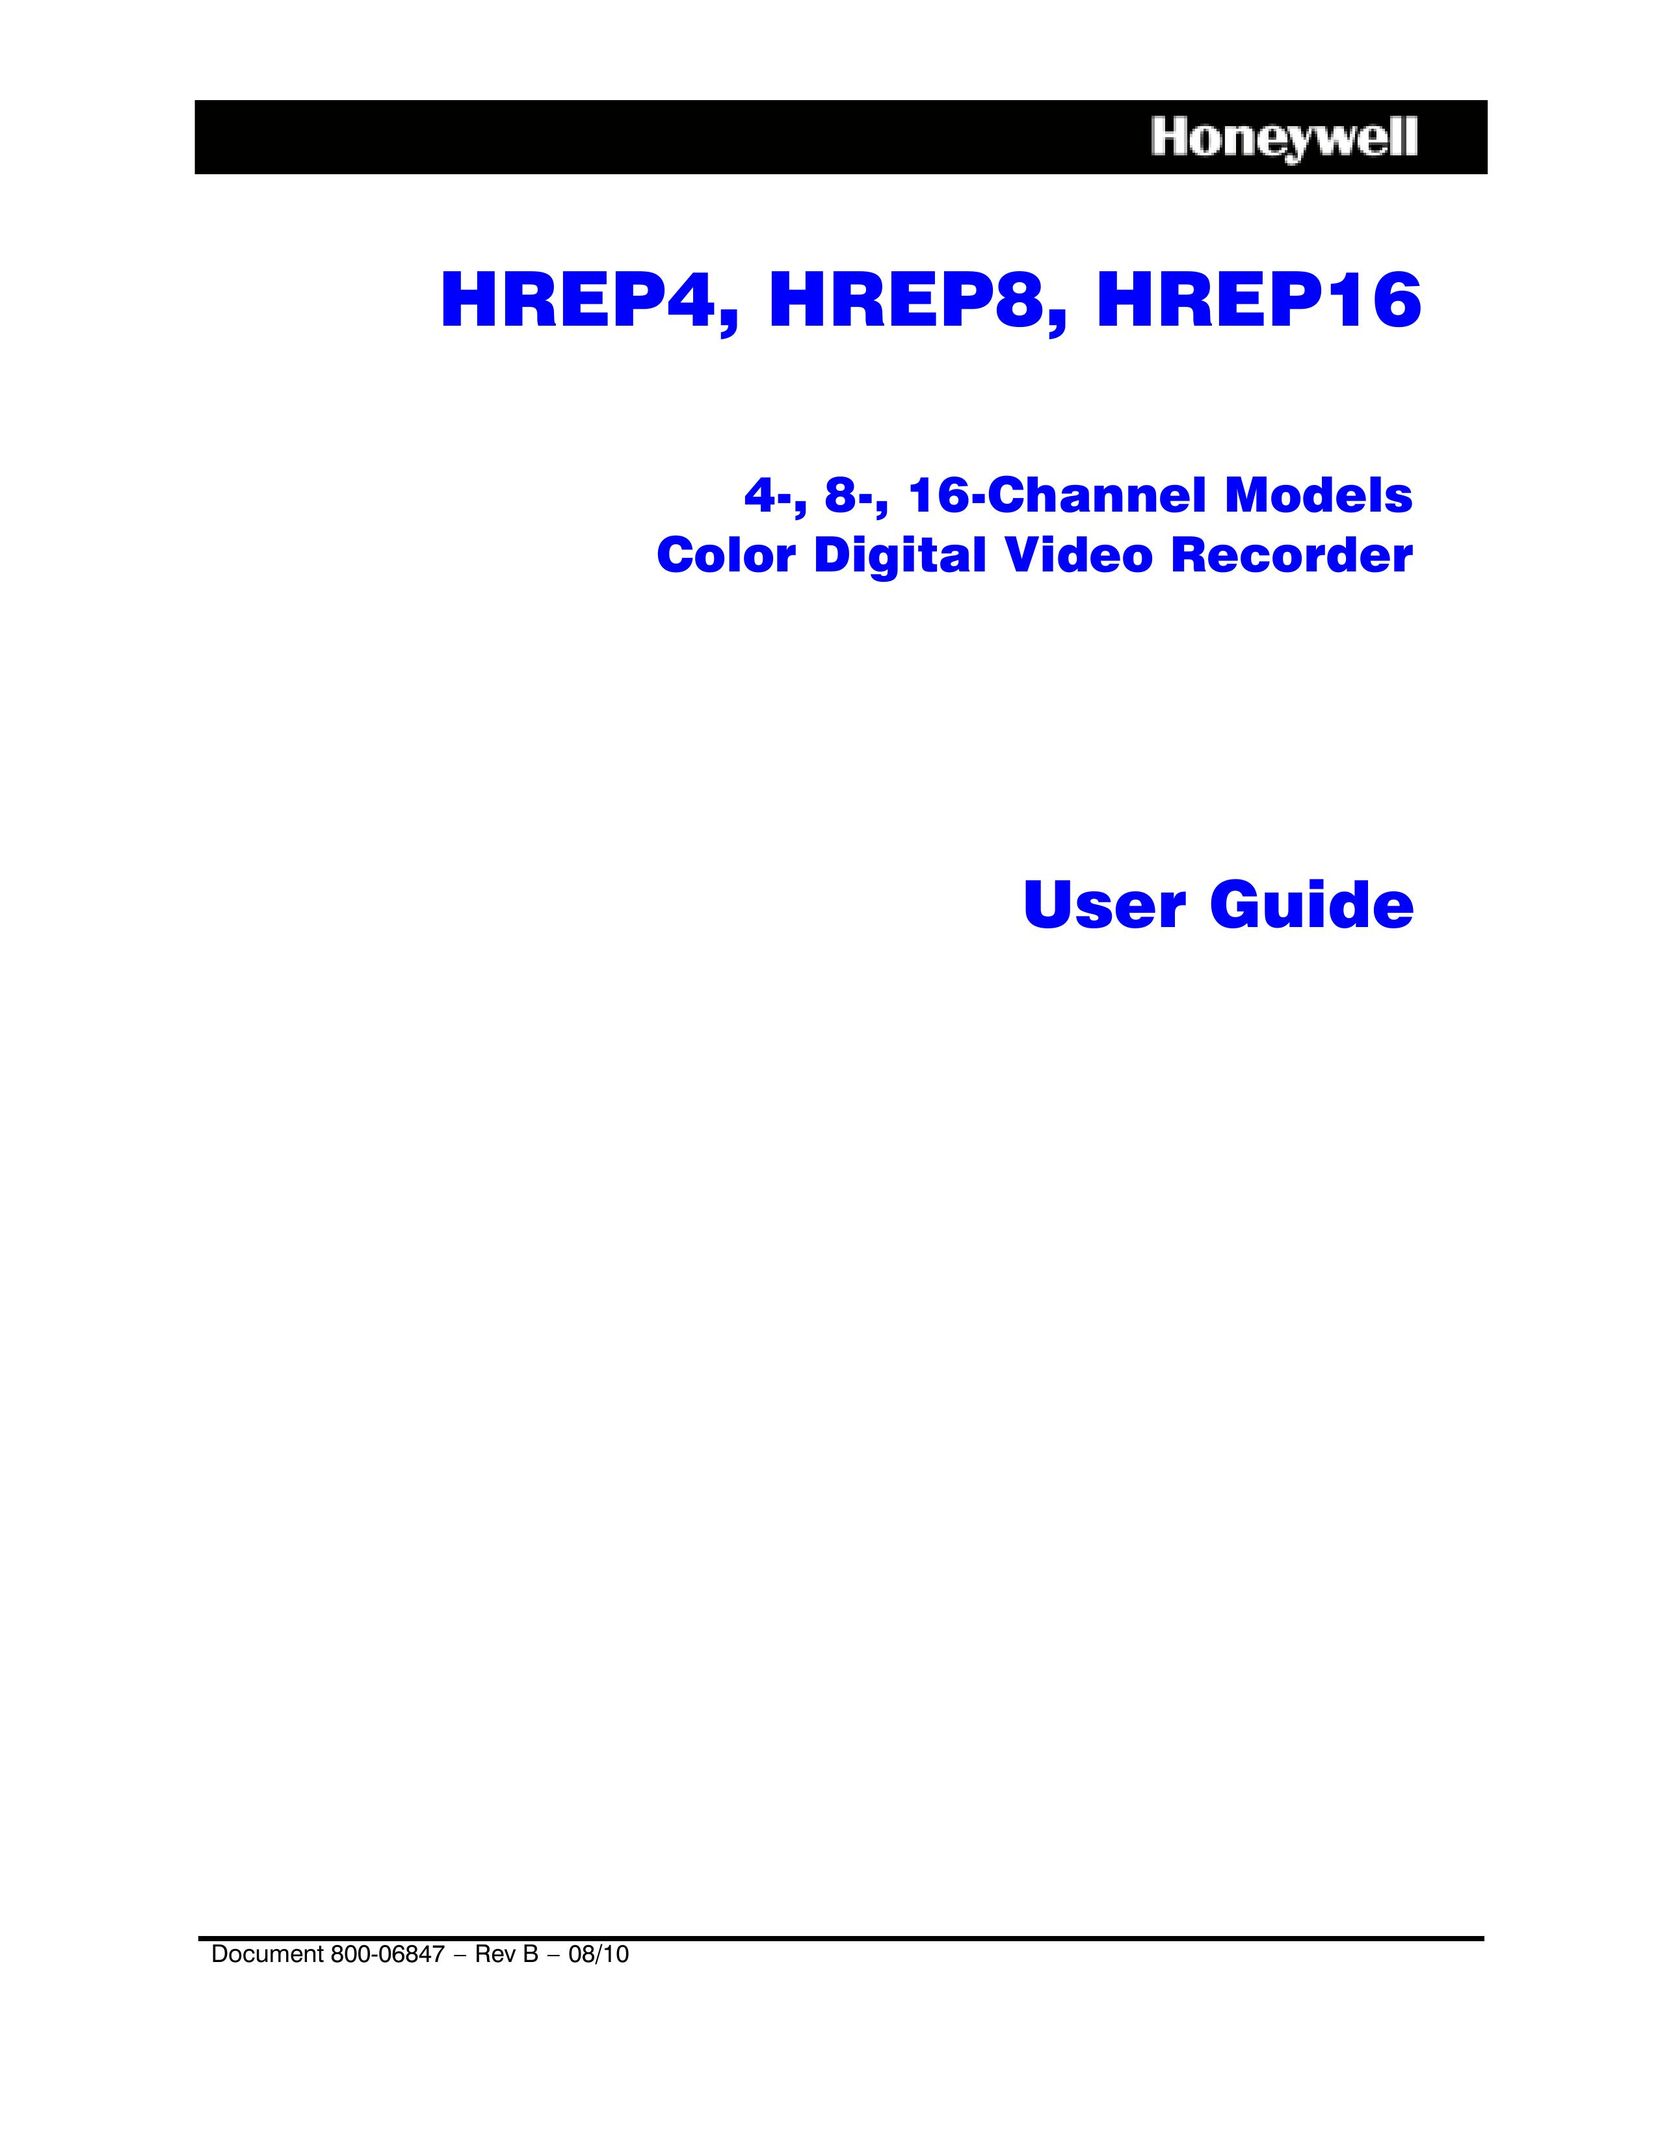 Honeywell HREP16 DVR User Manual